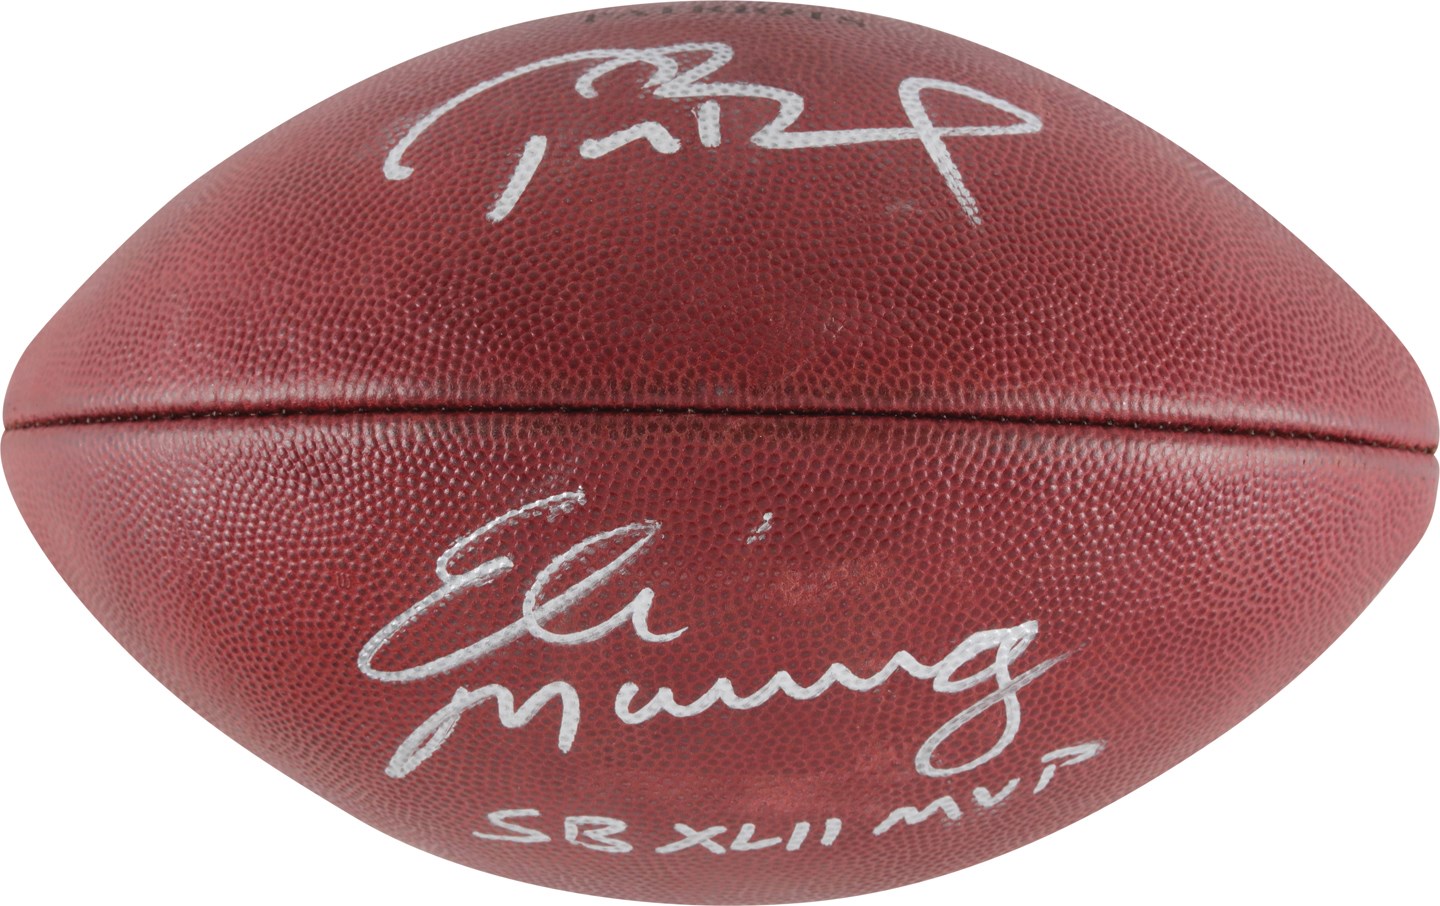 Tom Brady Super Bowl Football Collection - 2008 Tom Brady & Eli Manning Signed Super Bowl XLII Game Used Football (NFL PSA, Tristar & Steiner)